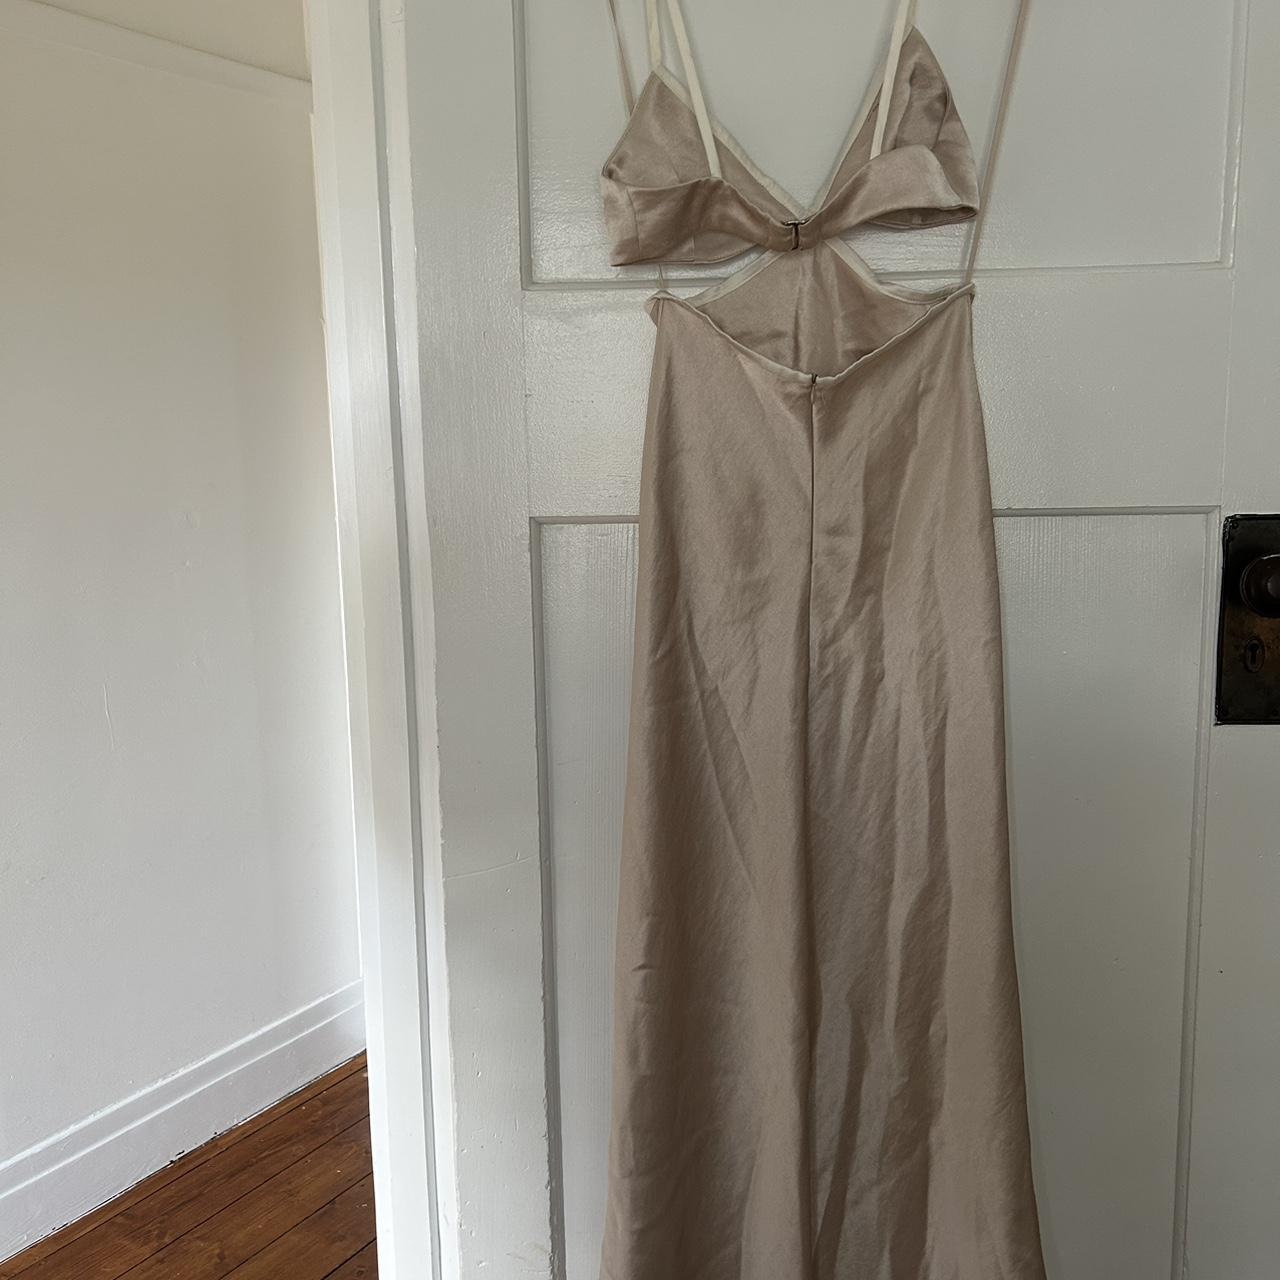 Bec + Bridge Veronique Maxi Dress in Sand size 8 - Depop